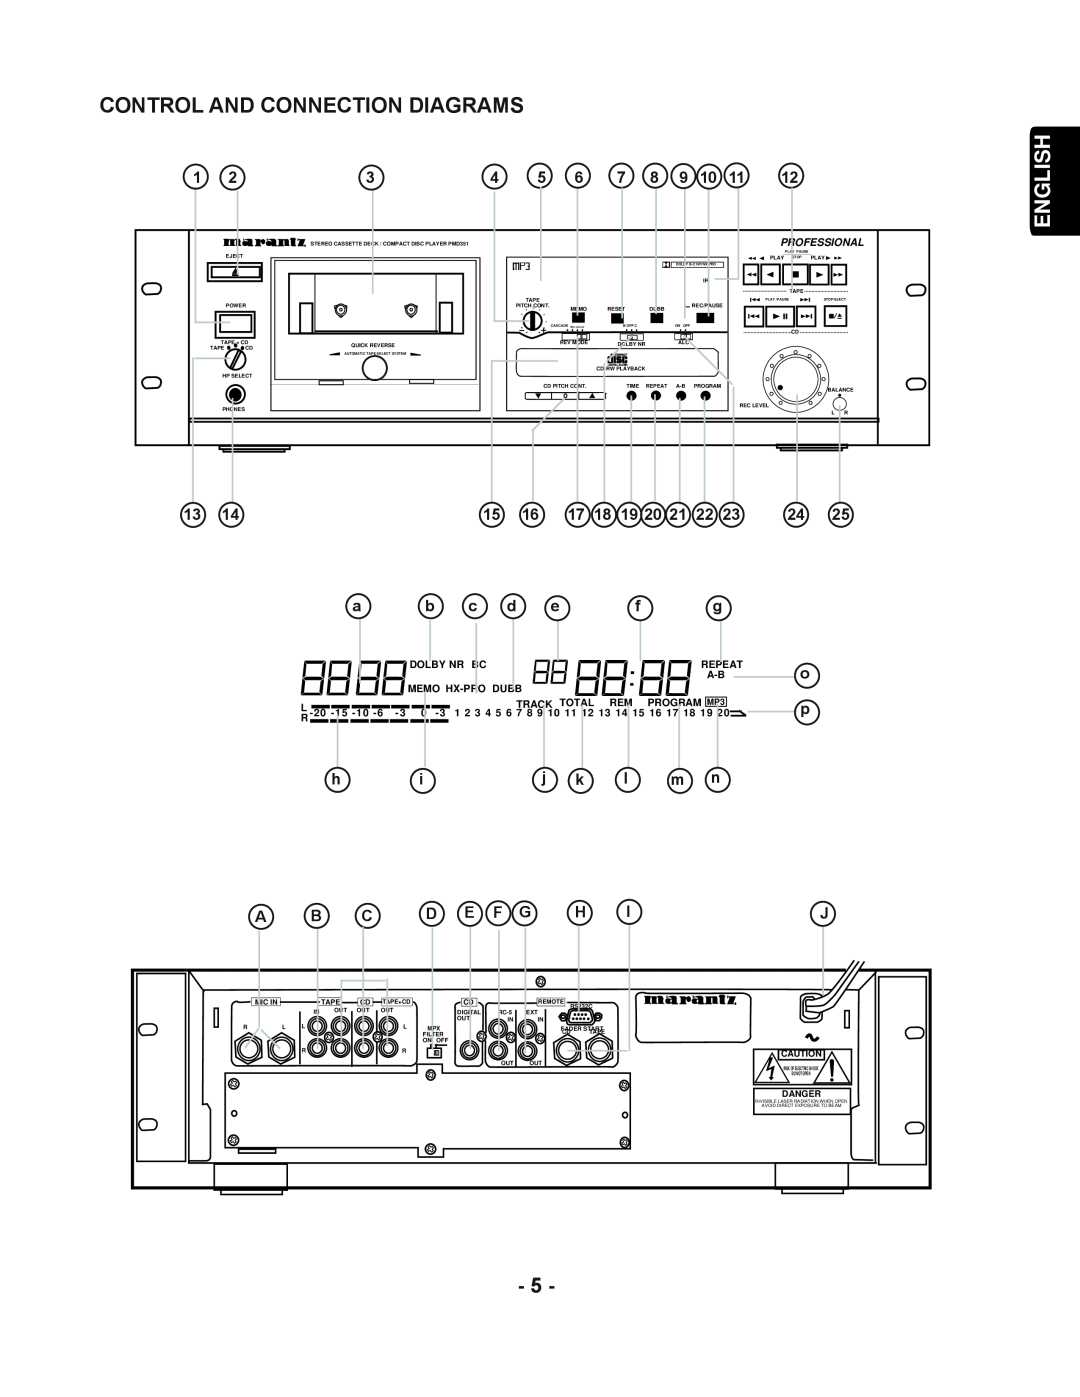 Marantz PMD351 manual English, Control And Connection Diagrams 